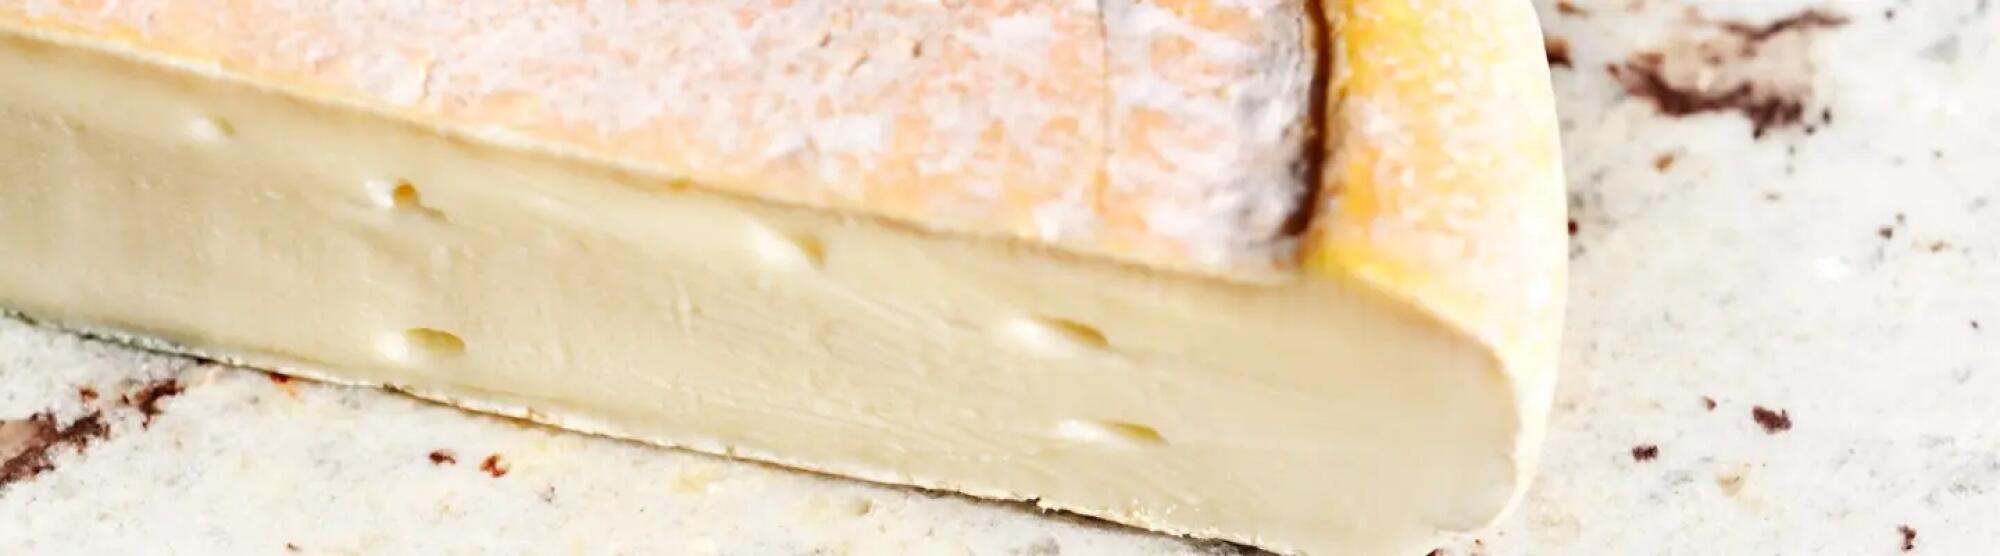 LA02_french-reblochon-cheese-from-the-alps-picture-id178945788